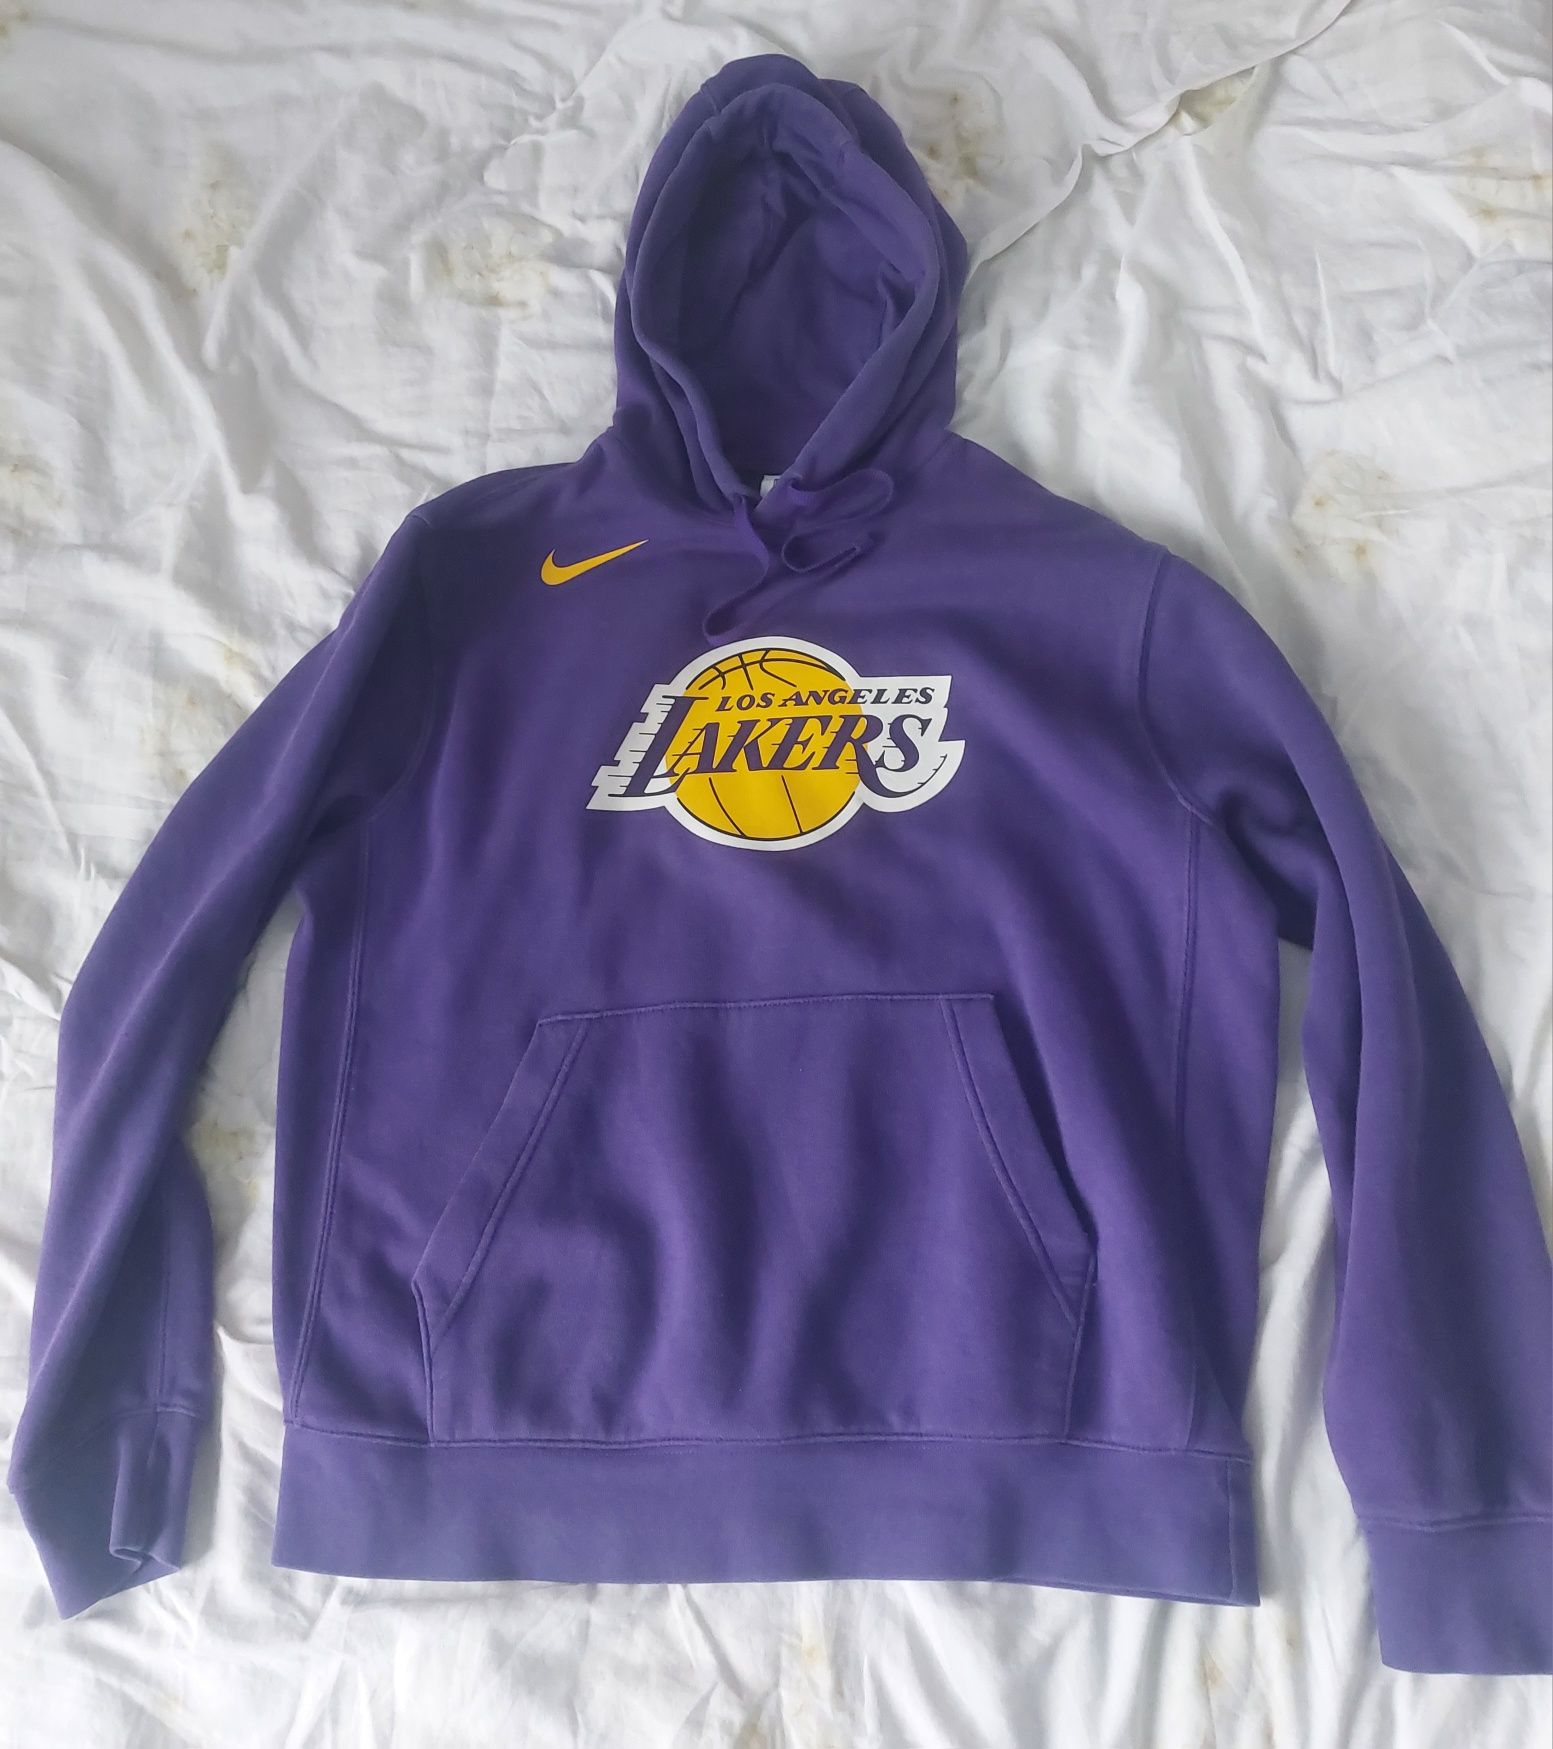 Hanorac Lakers Nike [NU IMI MERGE MESAGERIA olx]